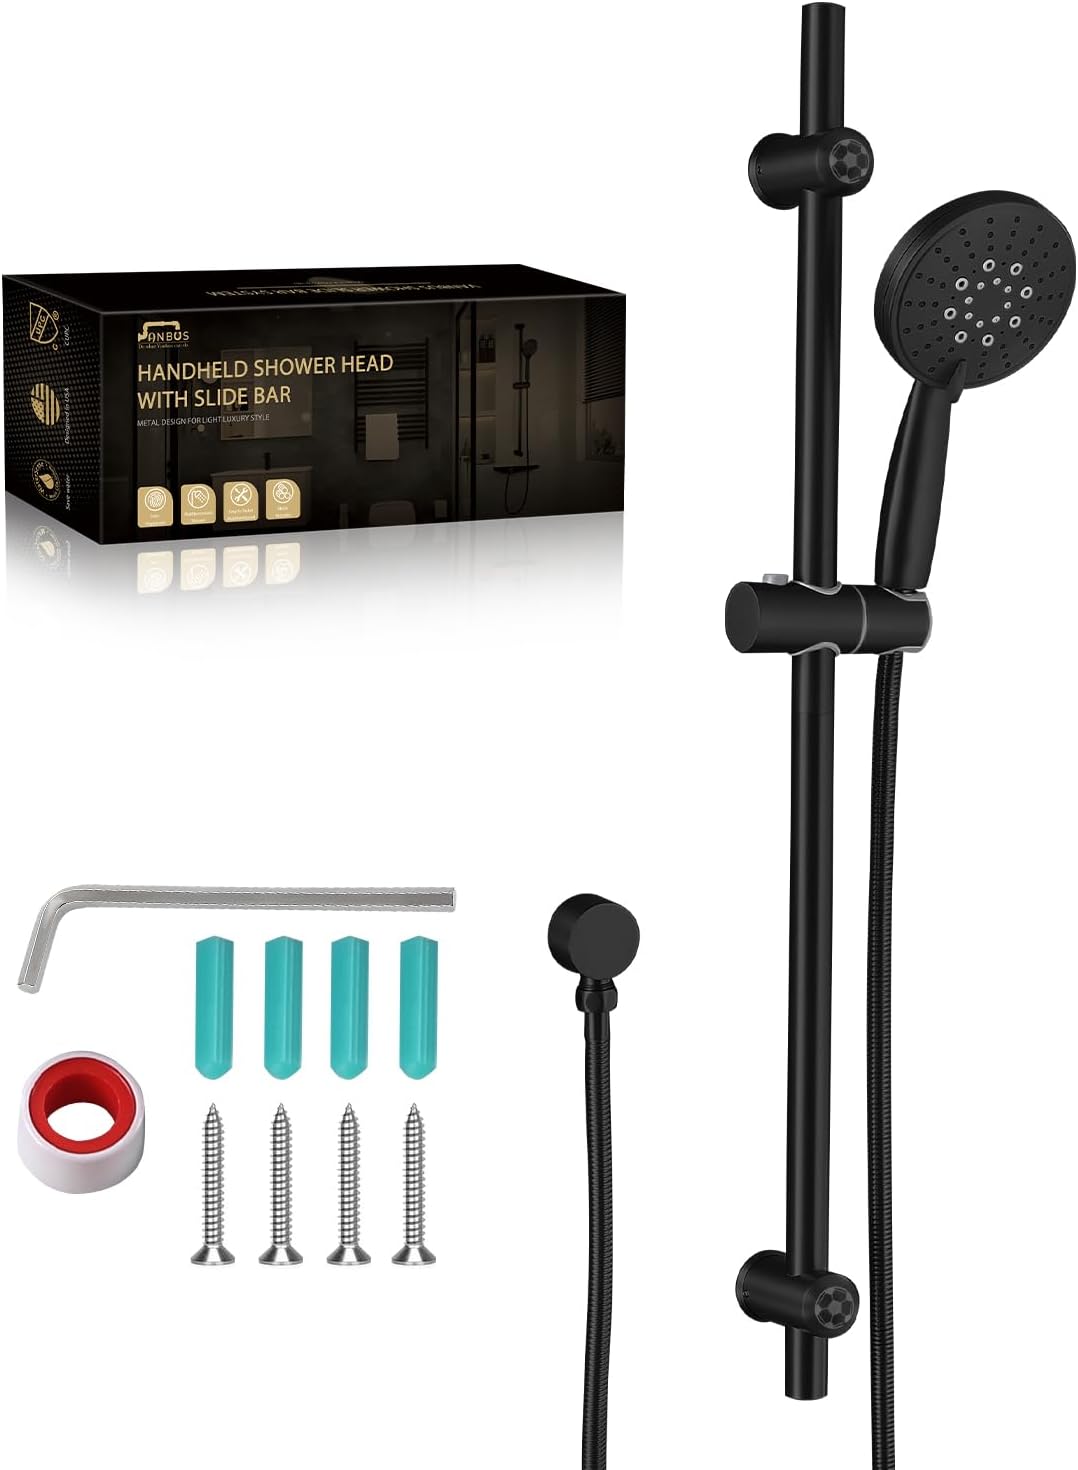 Shower Slide Bar System (metal), 5-Function Handheld Shower Head with Slide bar, 304 Stainless Steel Hose with Brass